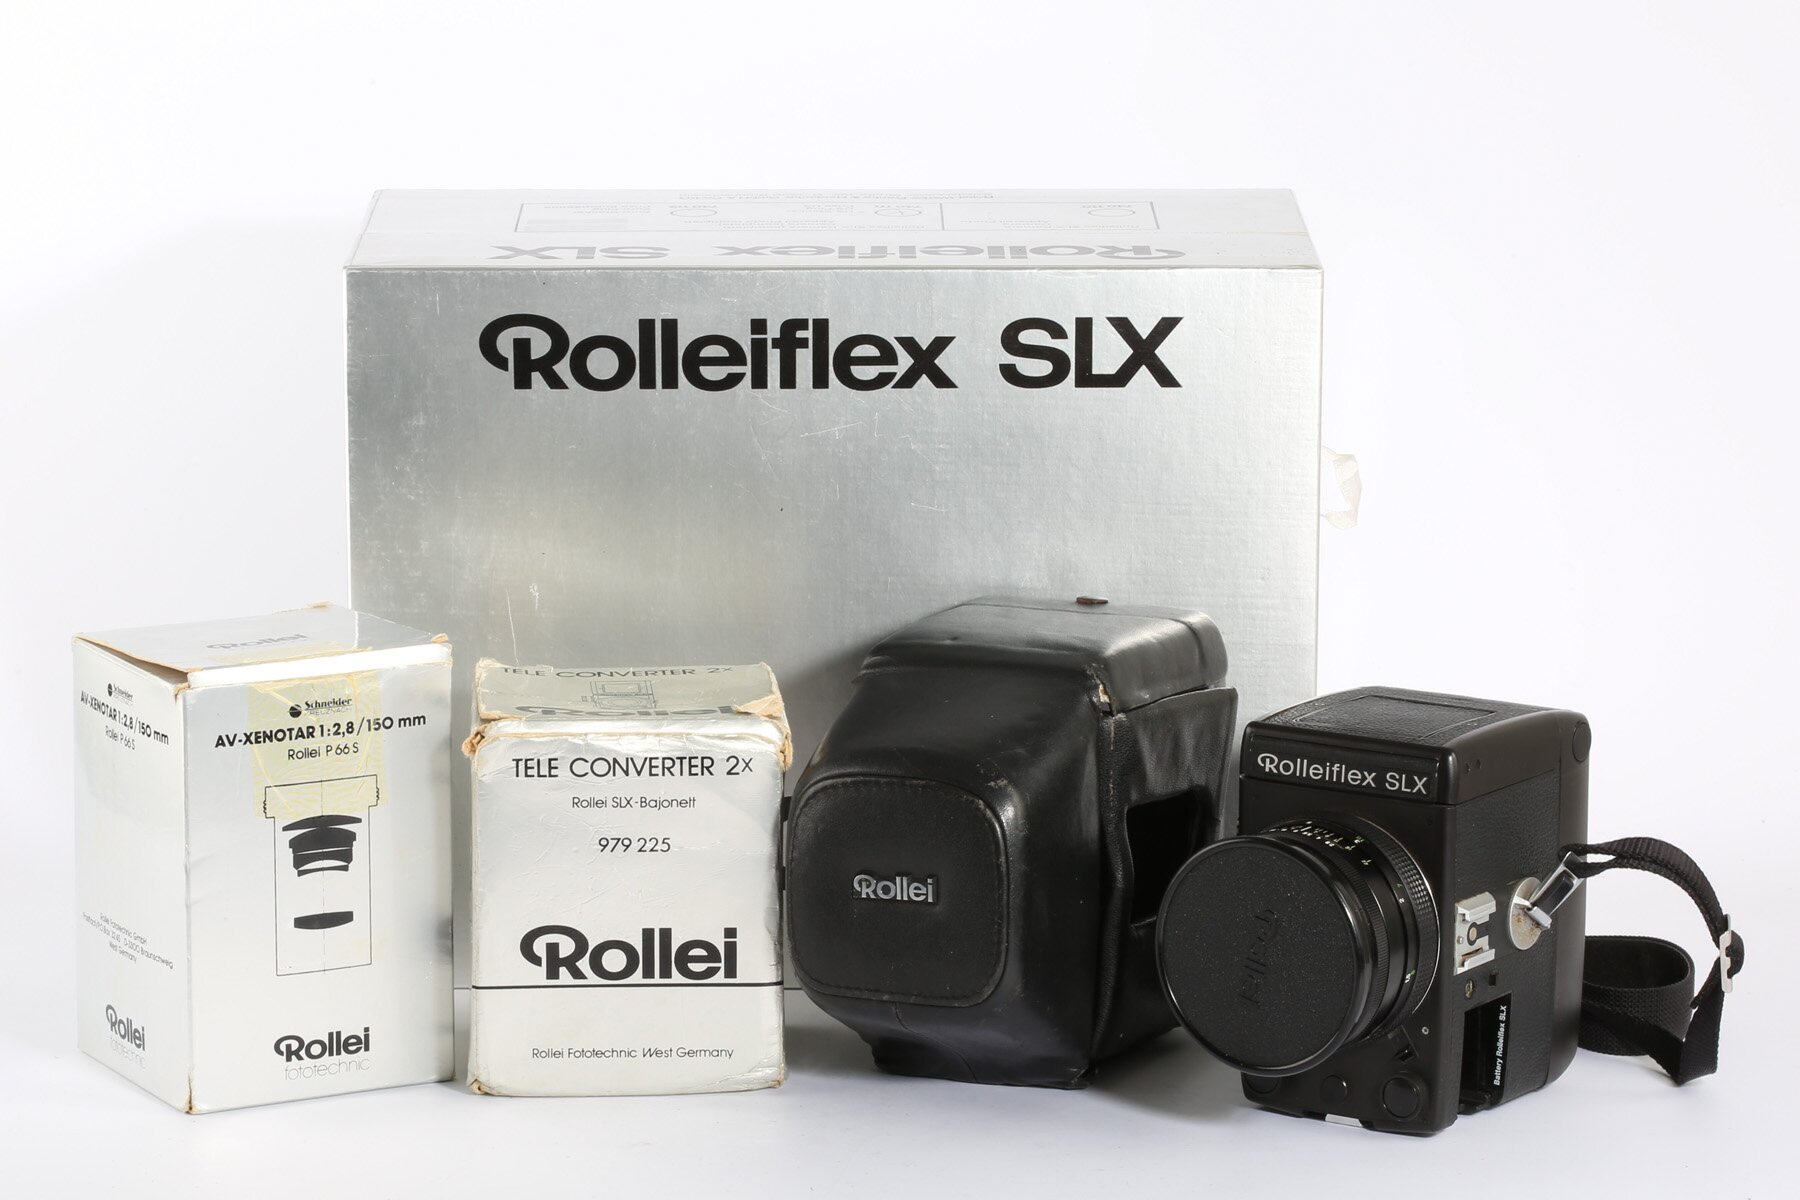 Rolleiflex SLX Carl Zeiss Planar 80mm 2,8 Schneider Kreuznach AV-Xenotar 150mm 2,8 Set